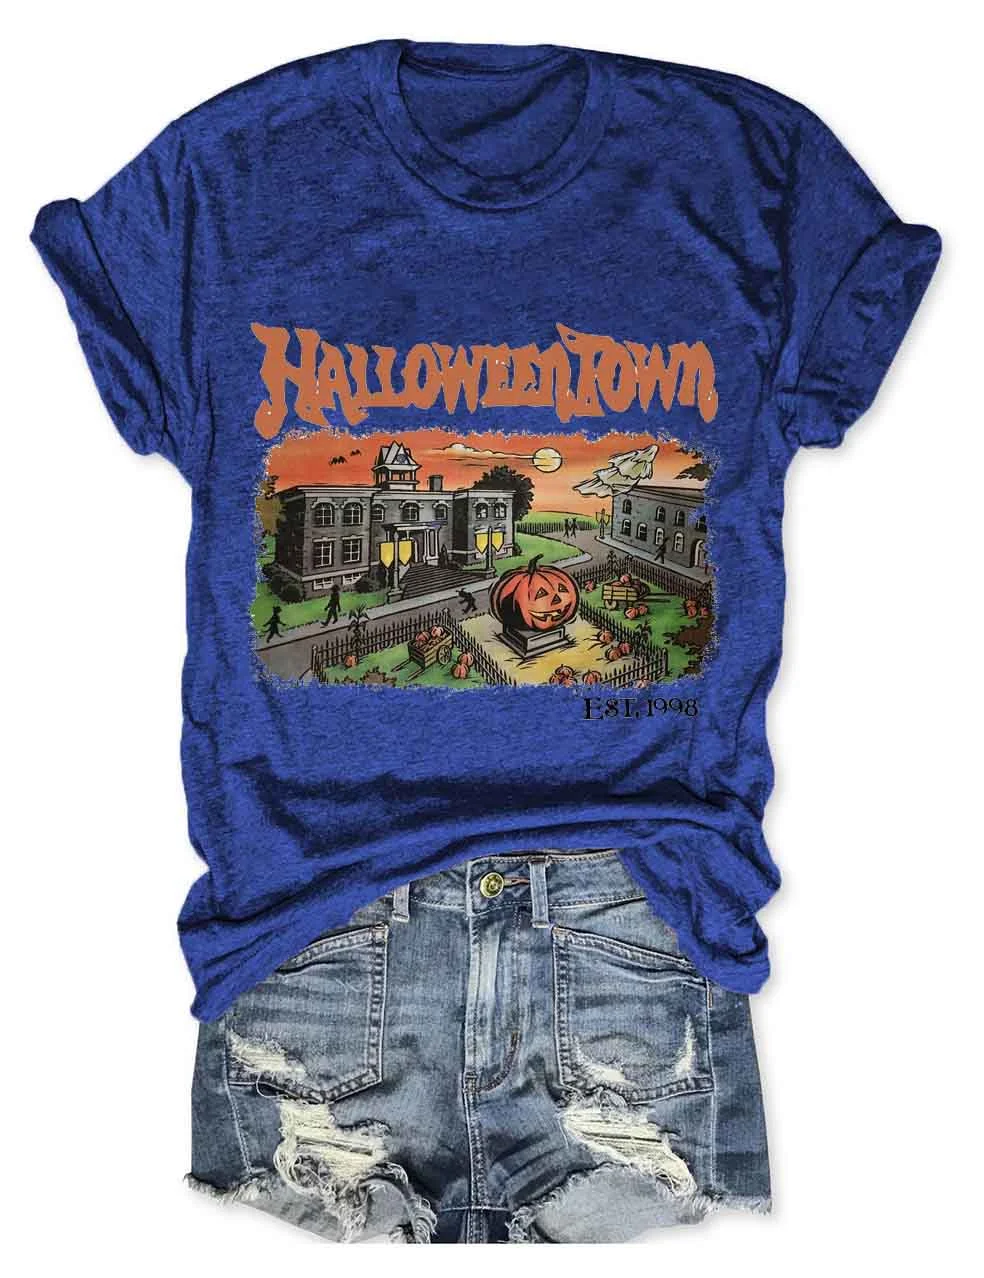 Halloweentown Printed T-Shirt